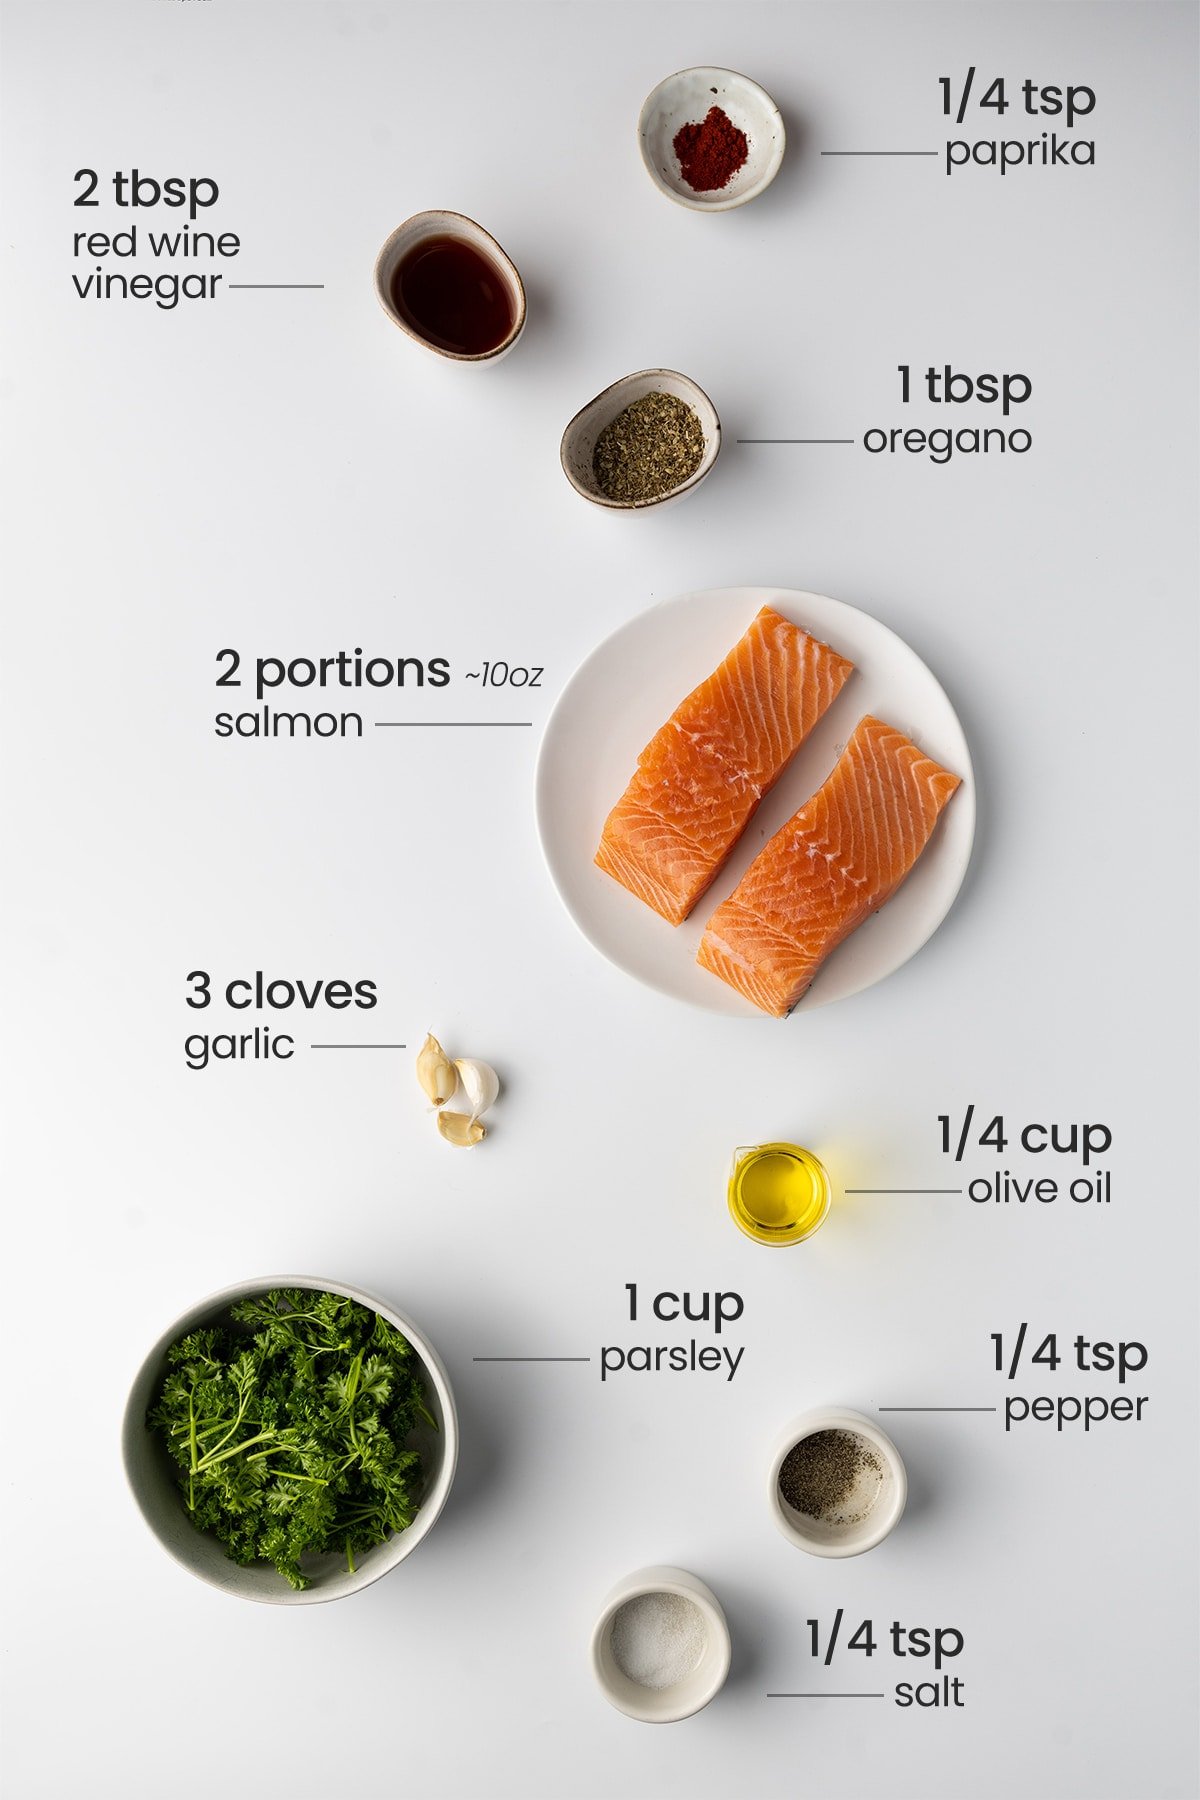 ingredients for chimichurri salmon - red wine vinegar, paprika, oregano, salmon, garlic, olive oil, parsley, pepper, salt